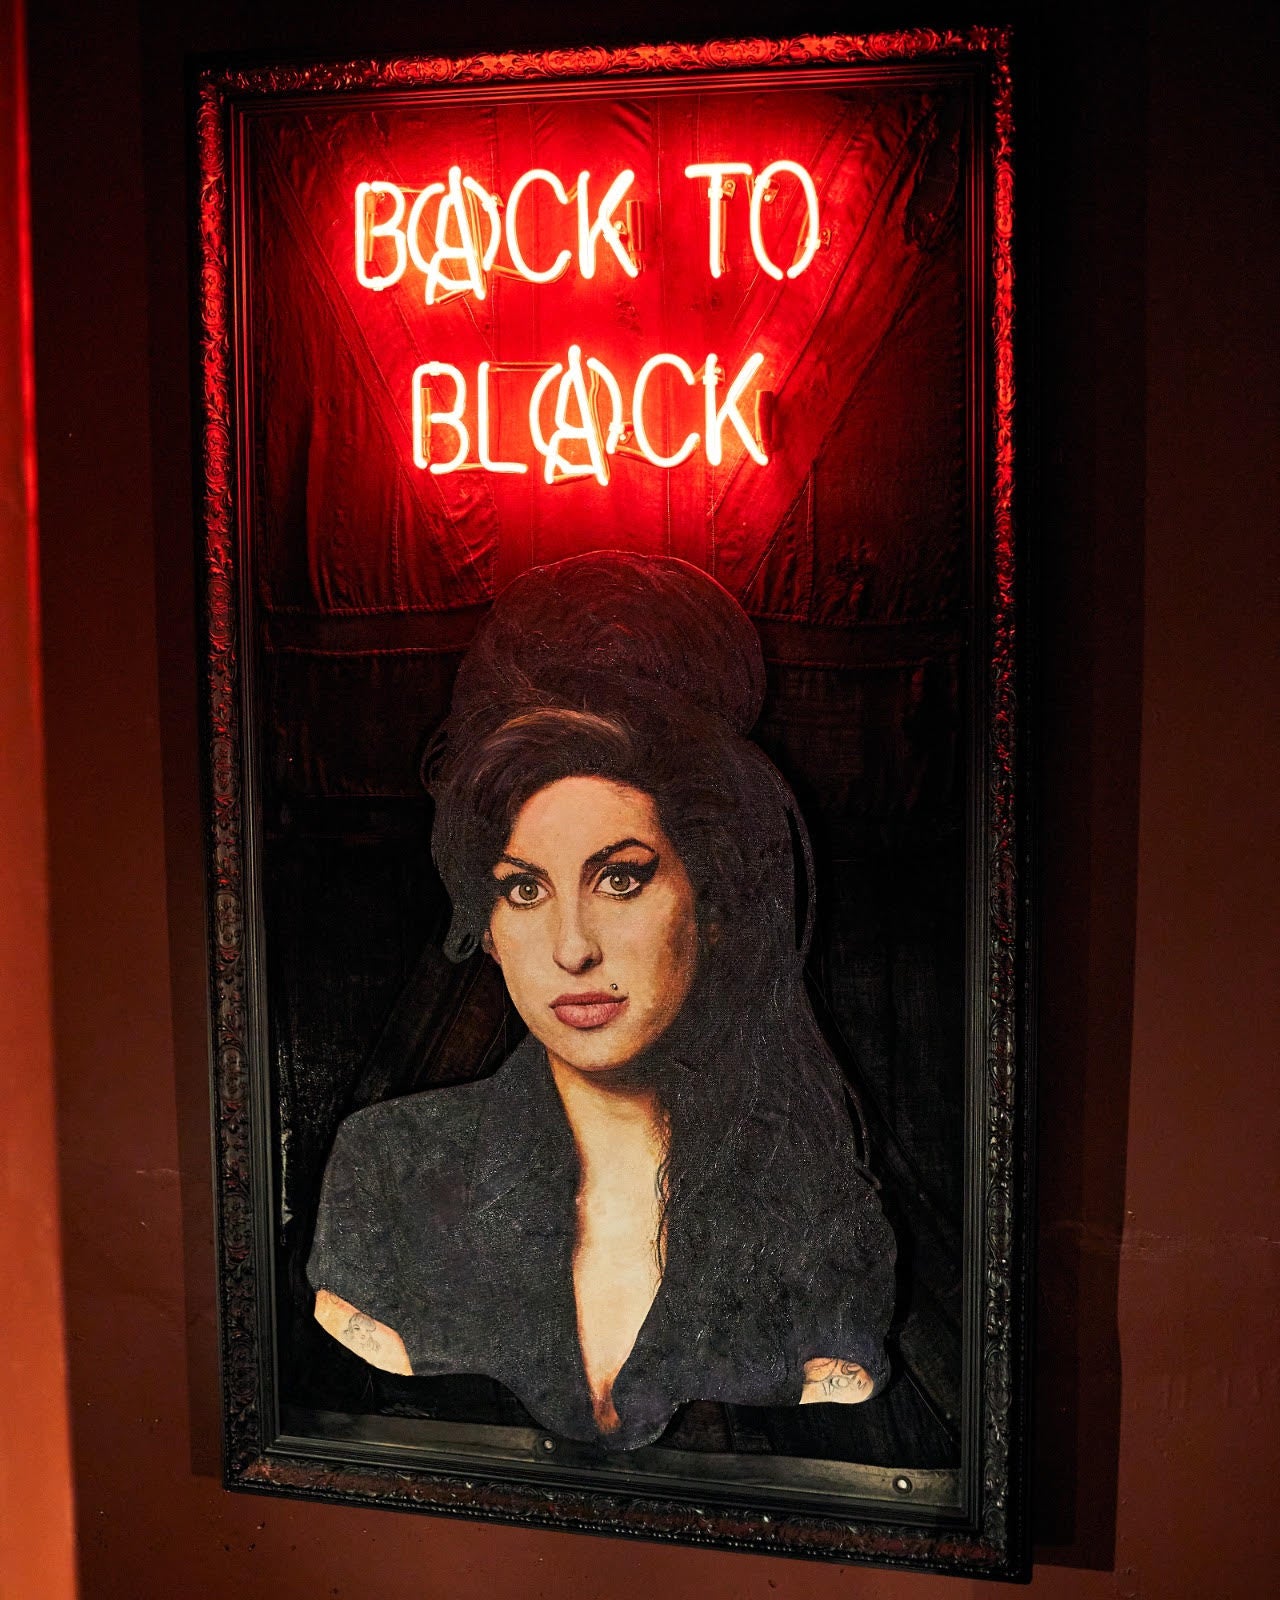 Amy Winehouse - Back To Black, by Illuminati Neon